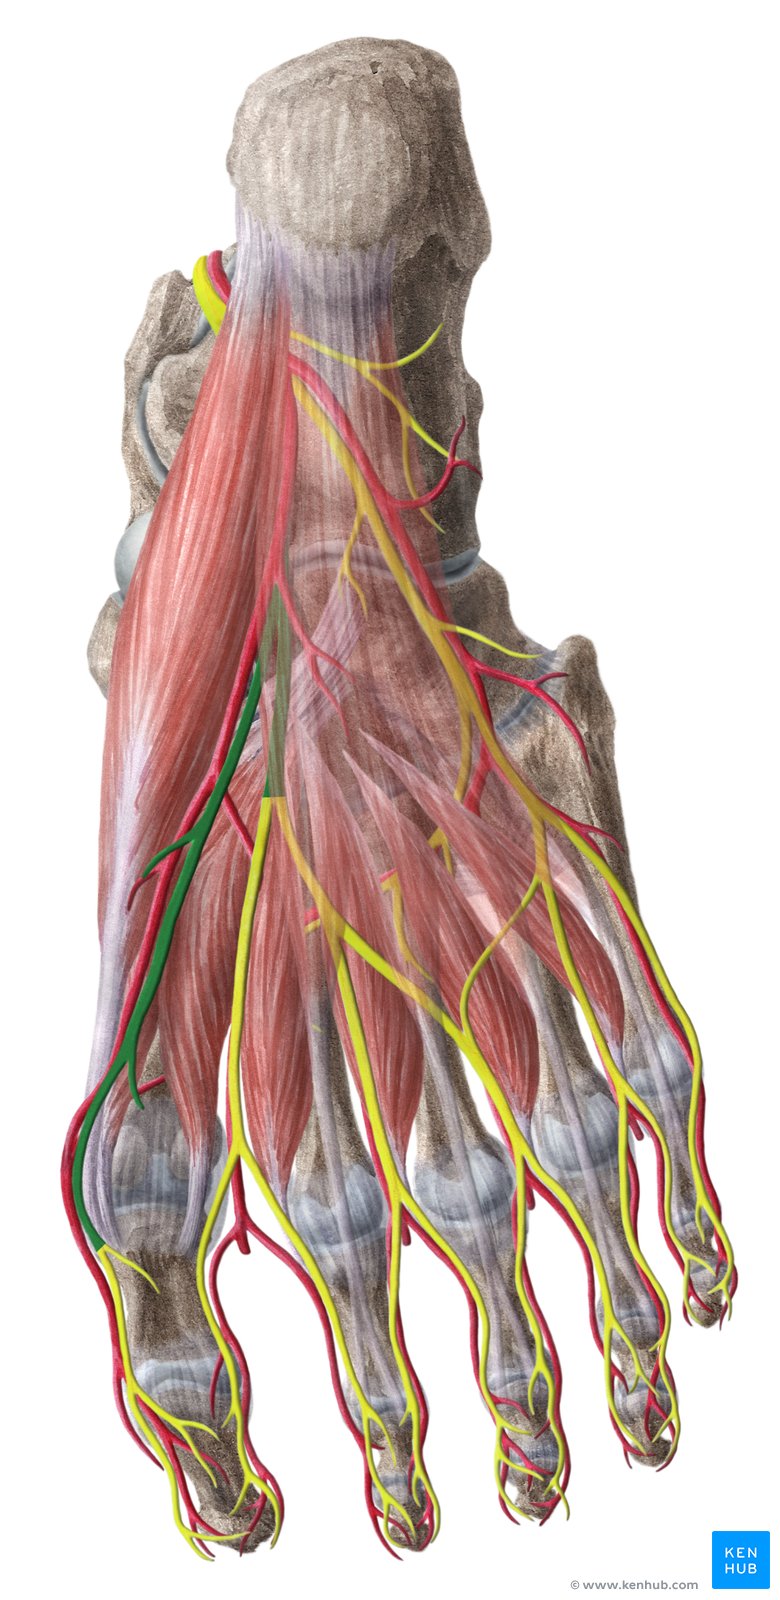 Medial plantar nerve - inferior view